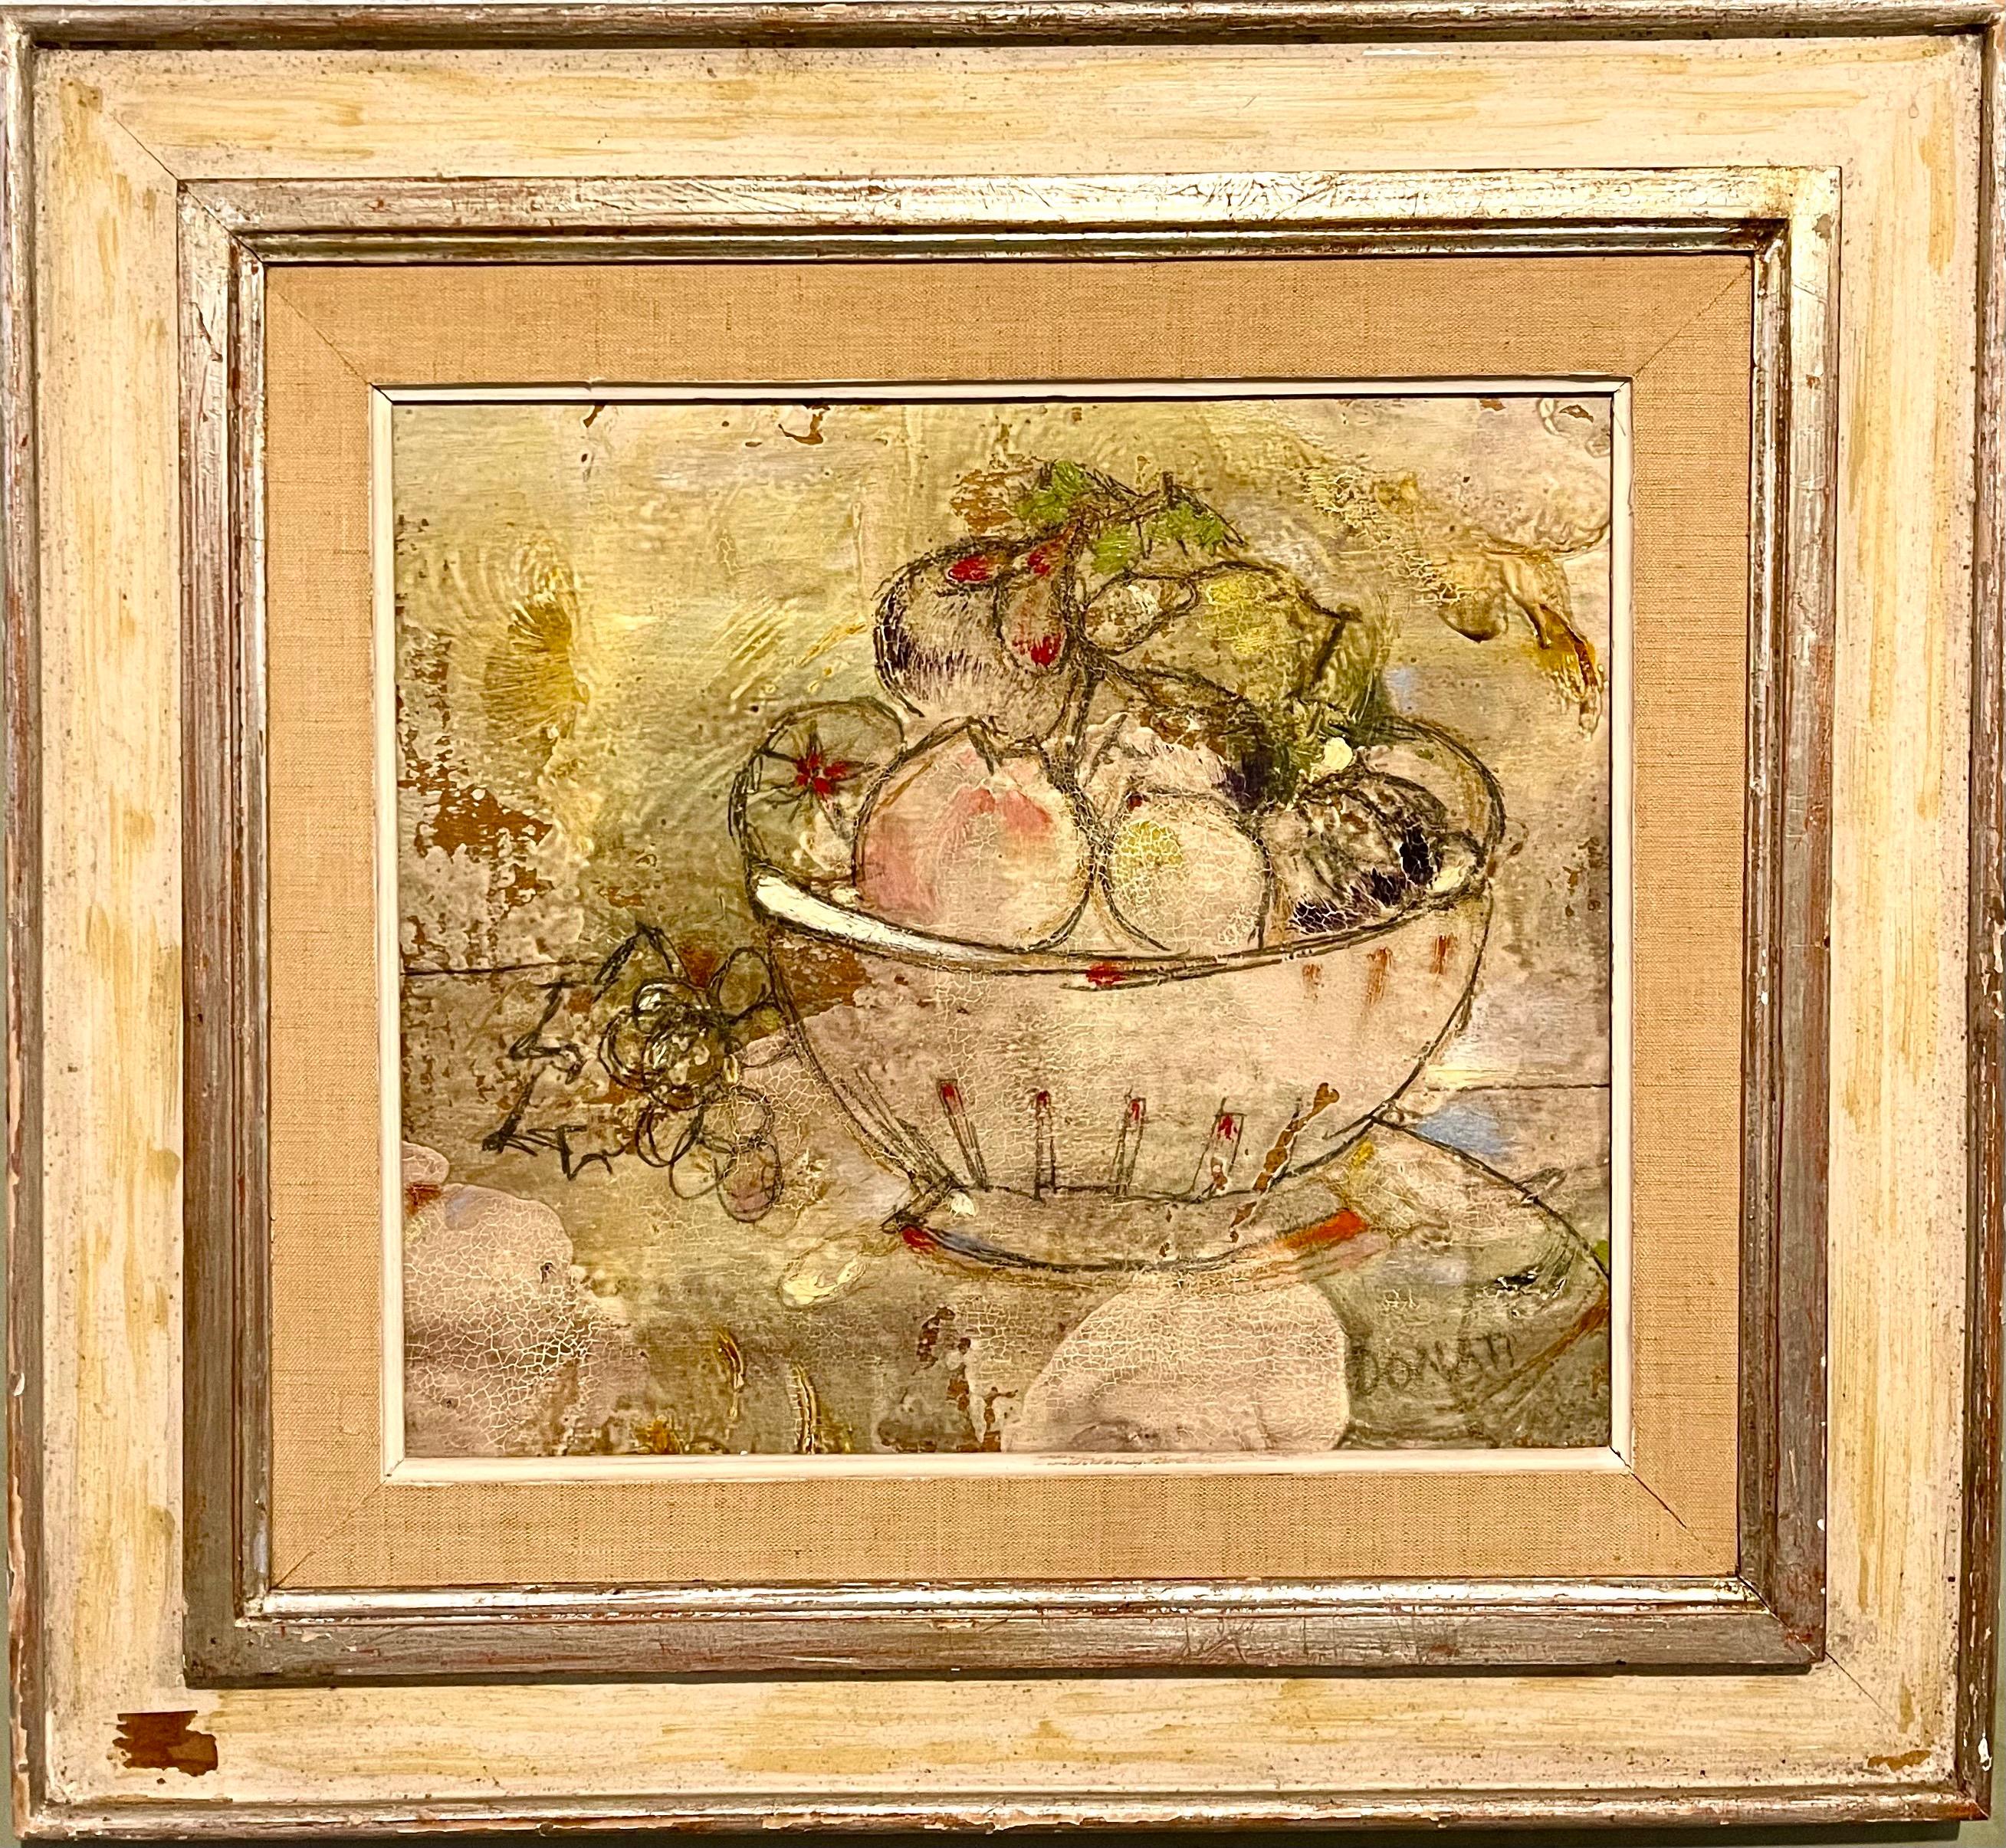 Lazzaro Donati Portrait Painting - Italian Modernist Surrealist Bowl Of Fruit Still Life Oil Painting La Fruttiera